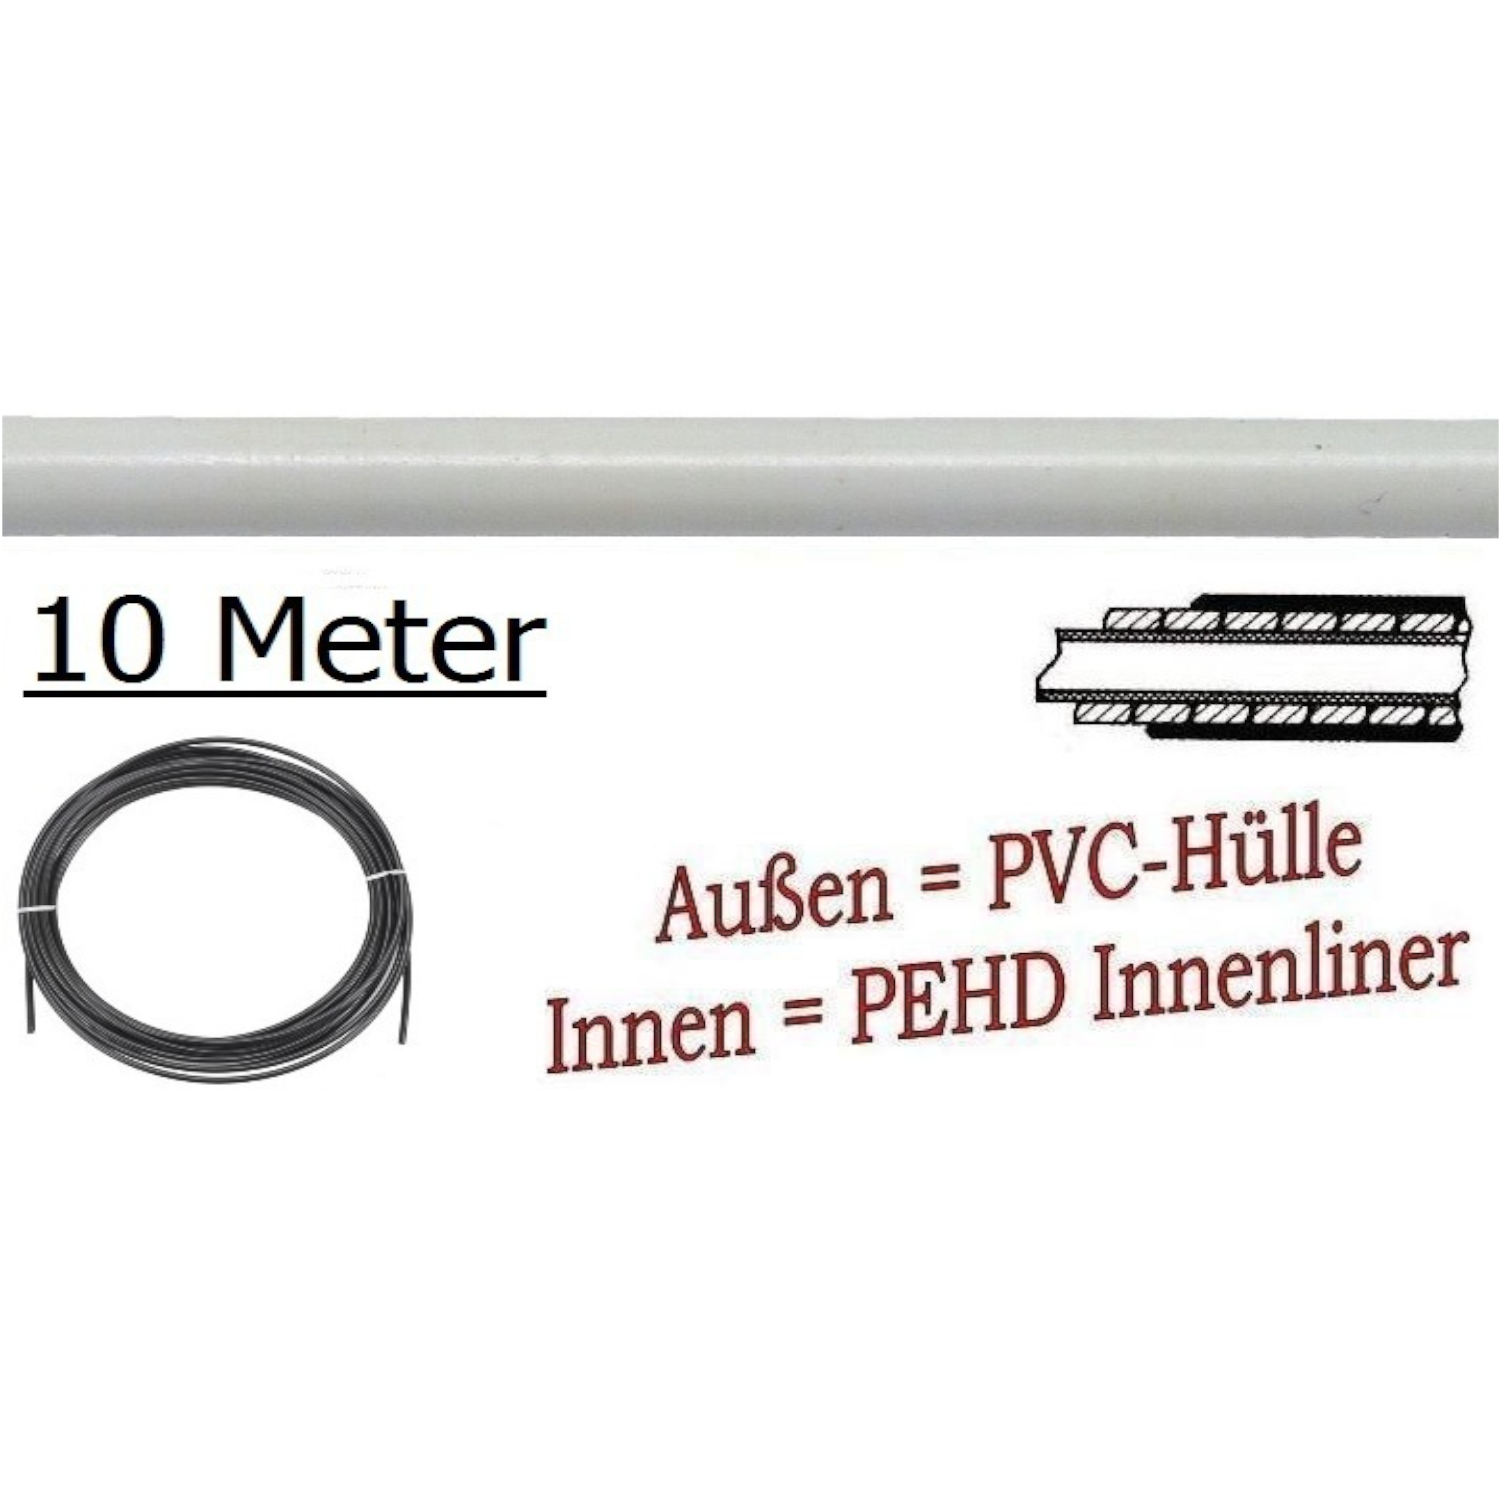 BREMS-Hülle 10 m-Rolle-DT10250010, in weiss, mit PE-HD-Innenliner